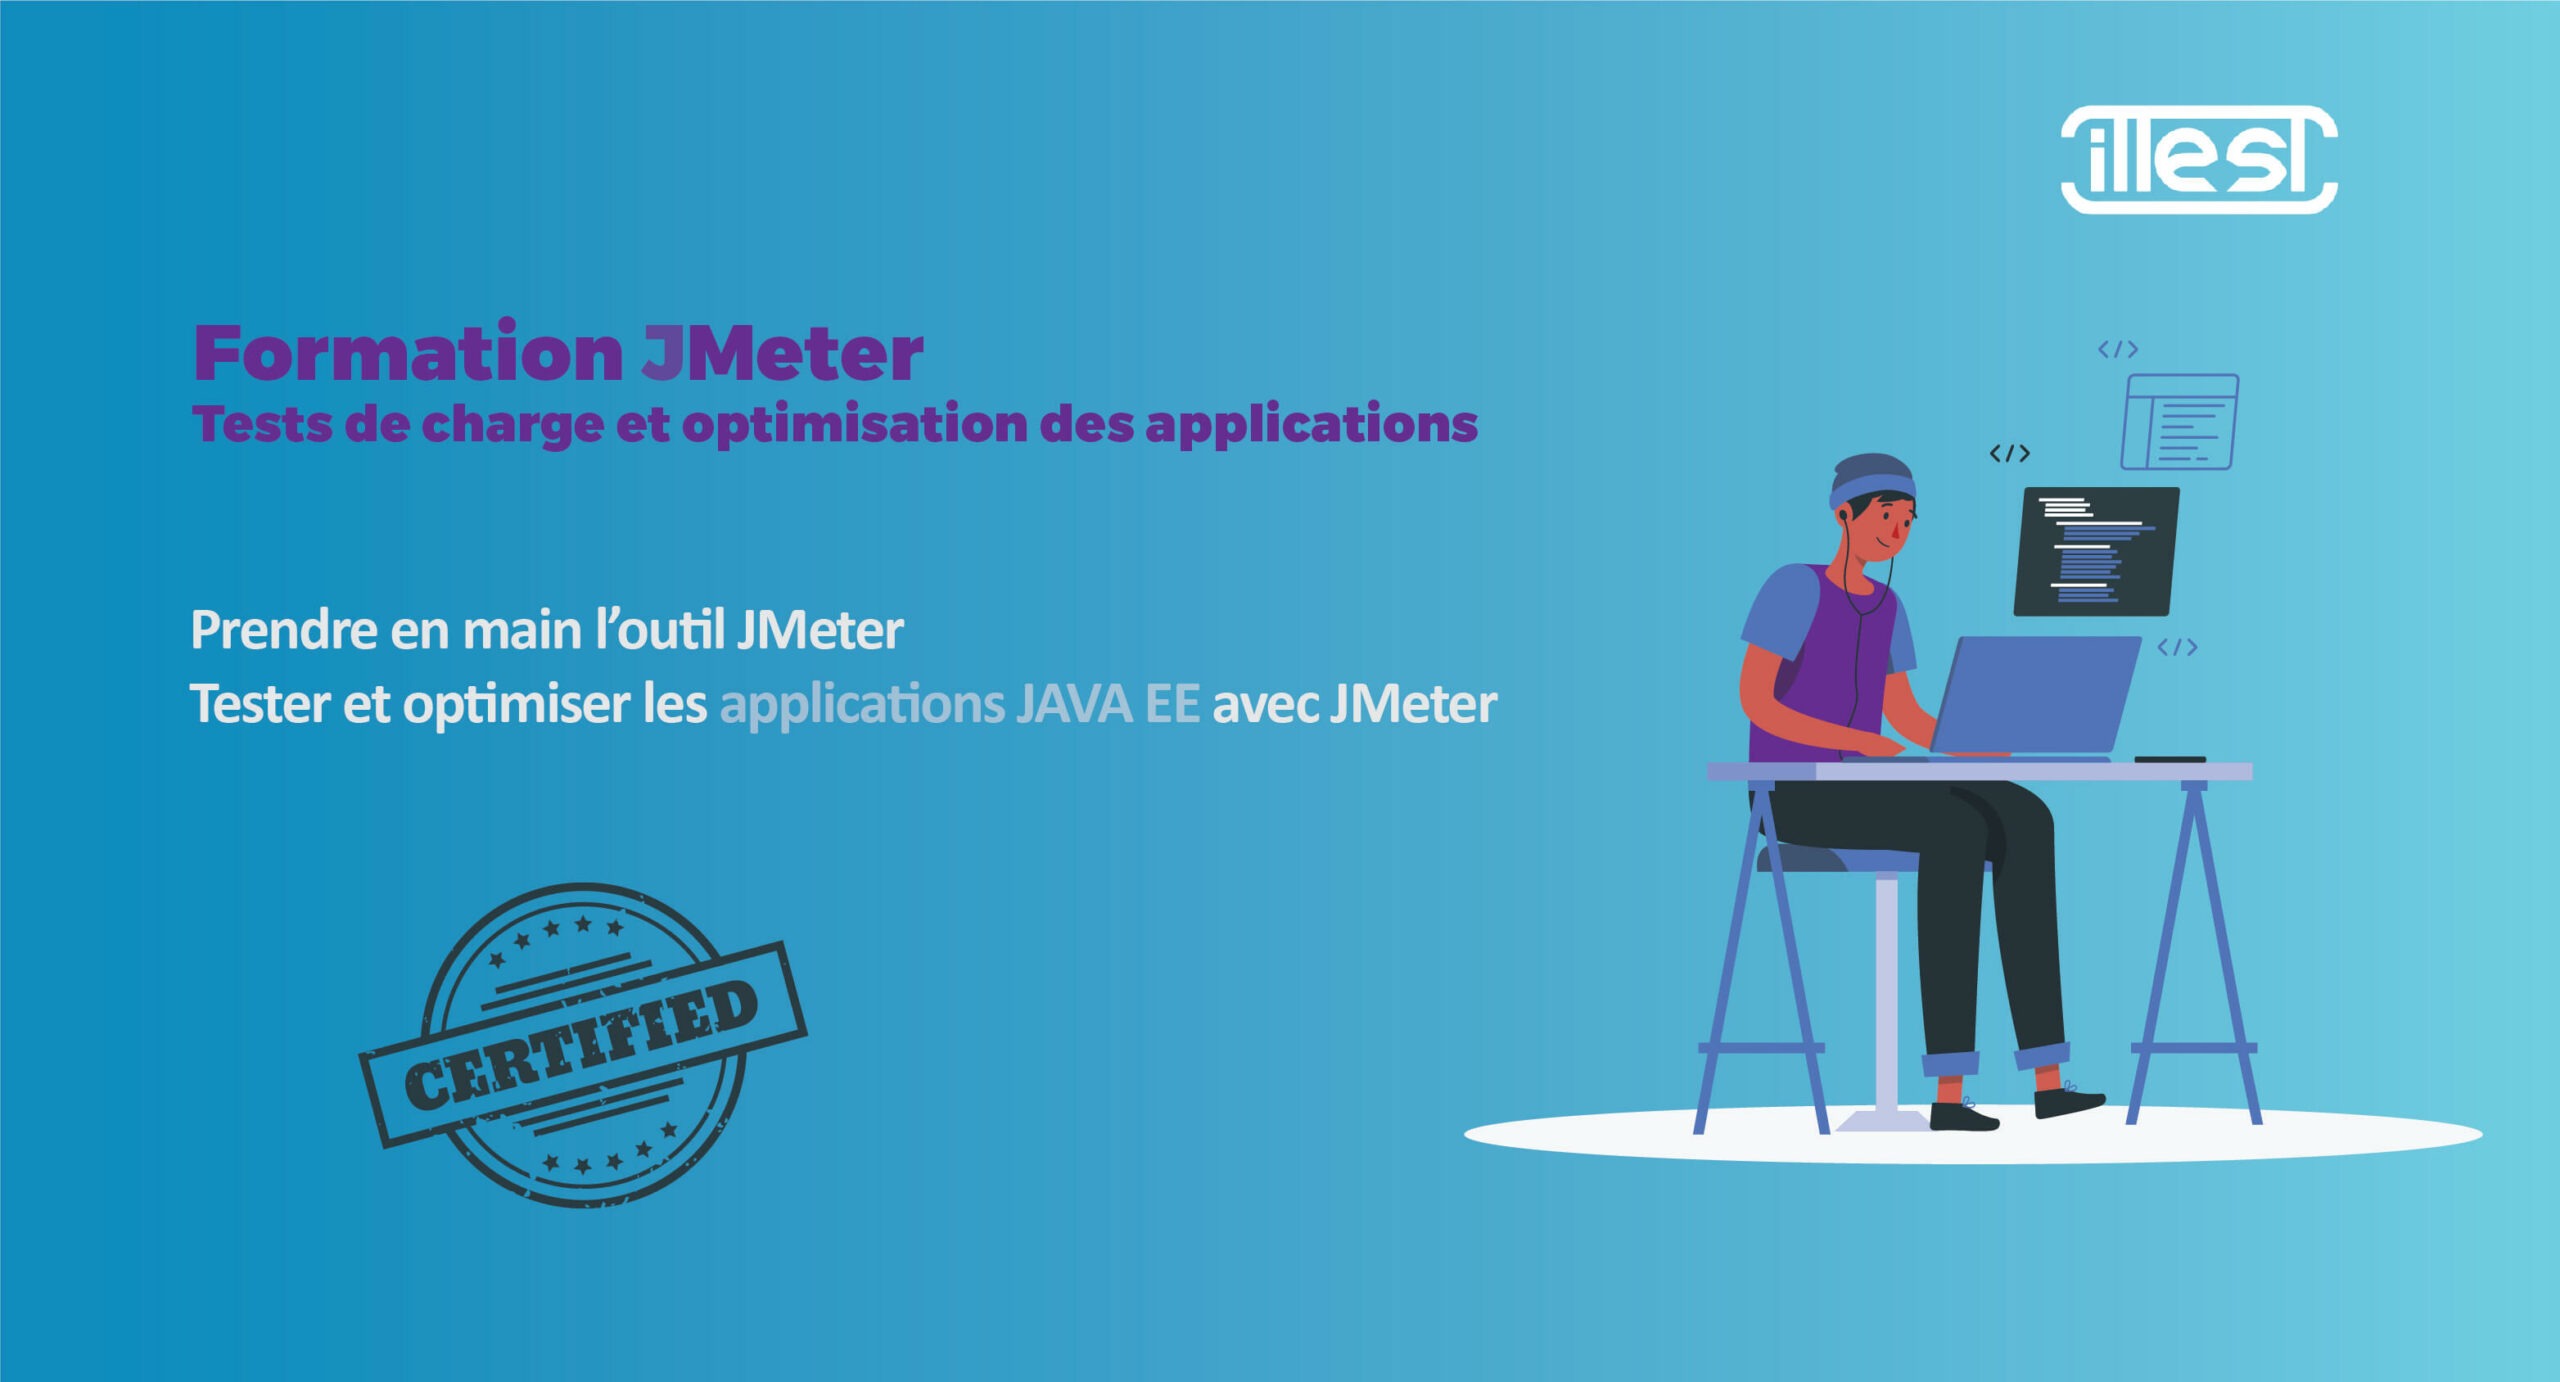 Formation JMeter : Tests de charge et optimisation des applications